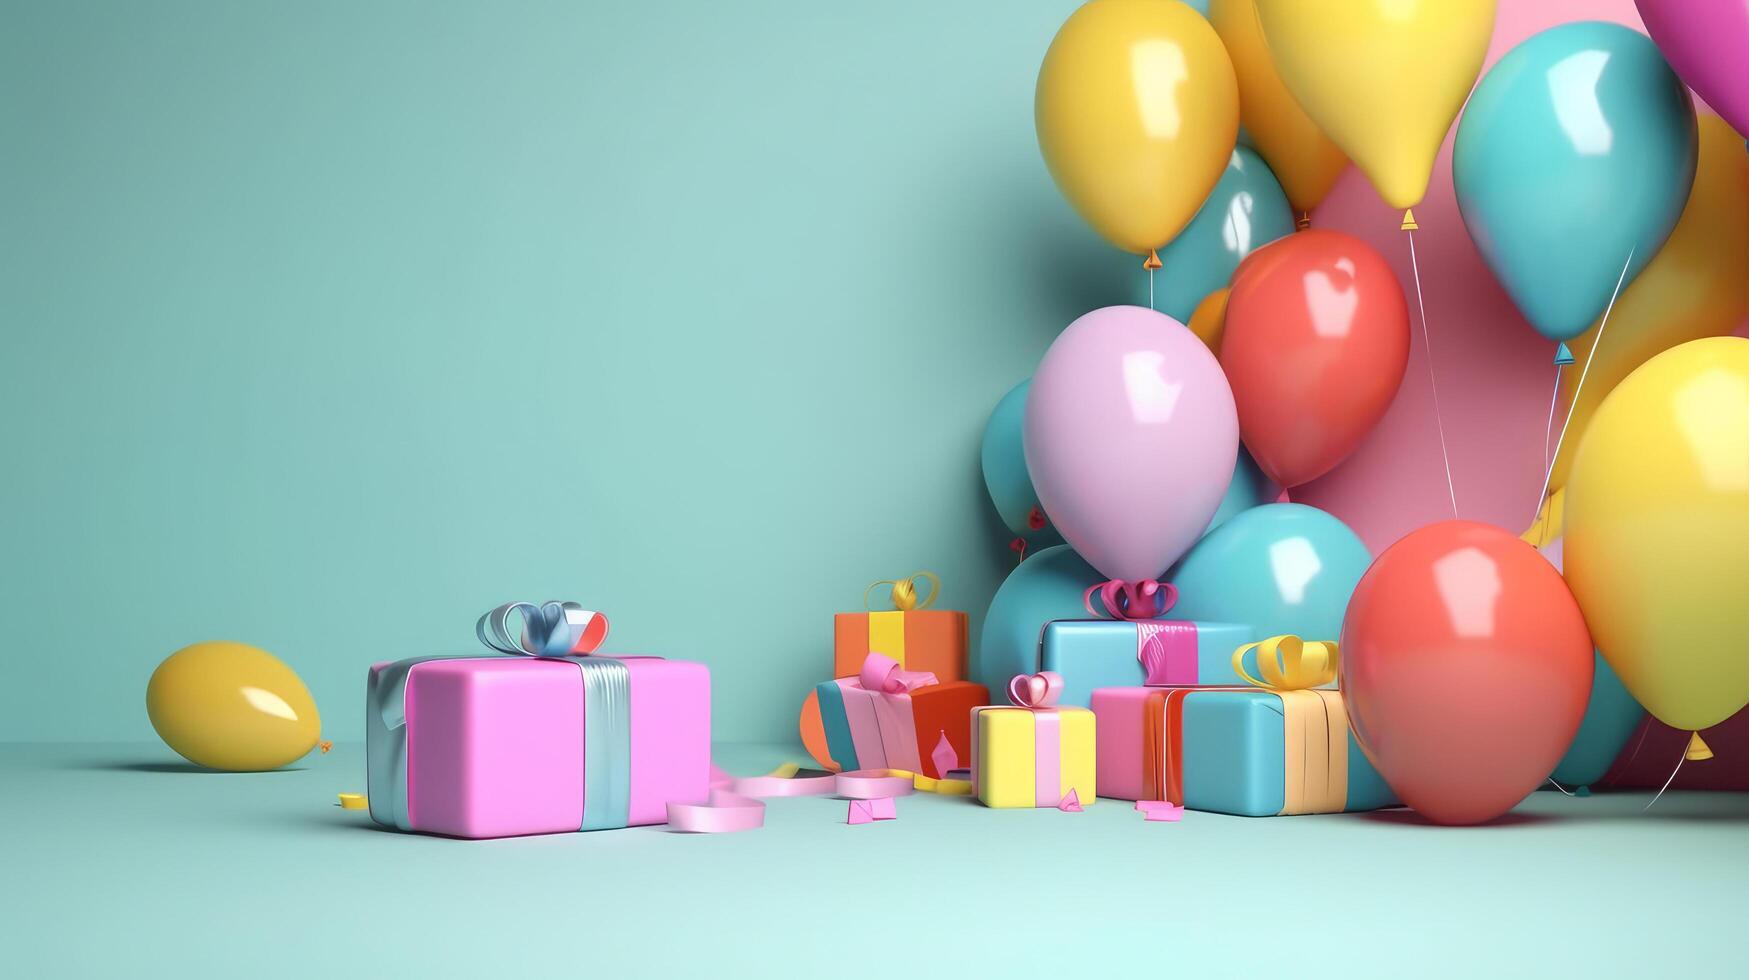 Happy Birthday Background with balloons. Illustration photo